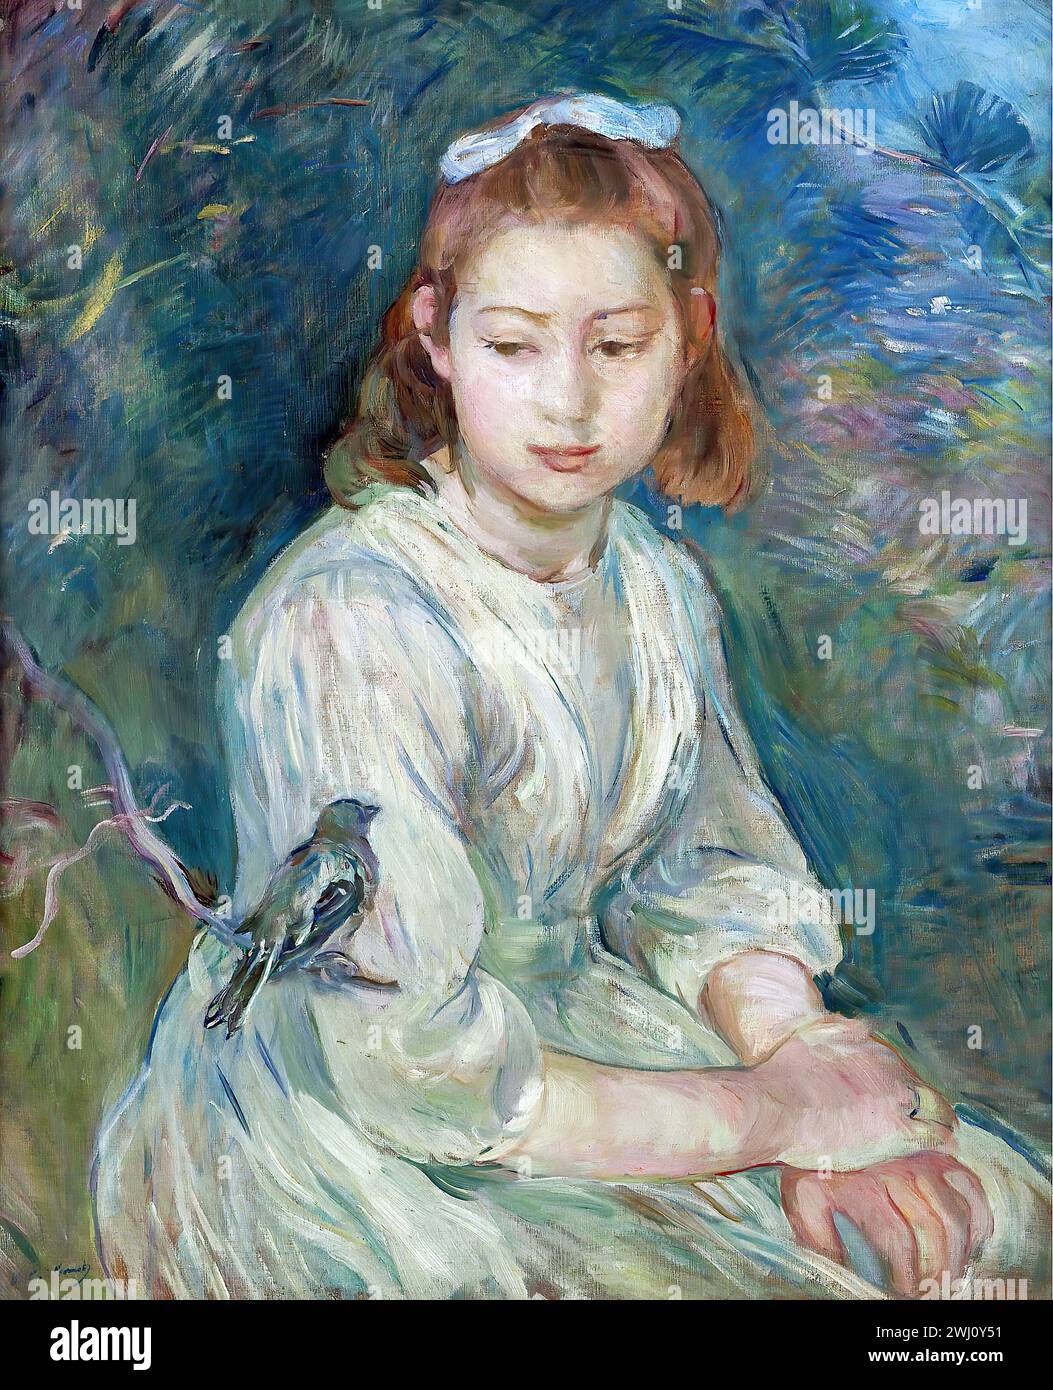 Berthe Morisot - Young girl with a bird [1891] Stock Photo